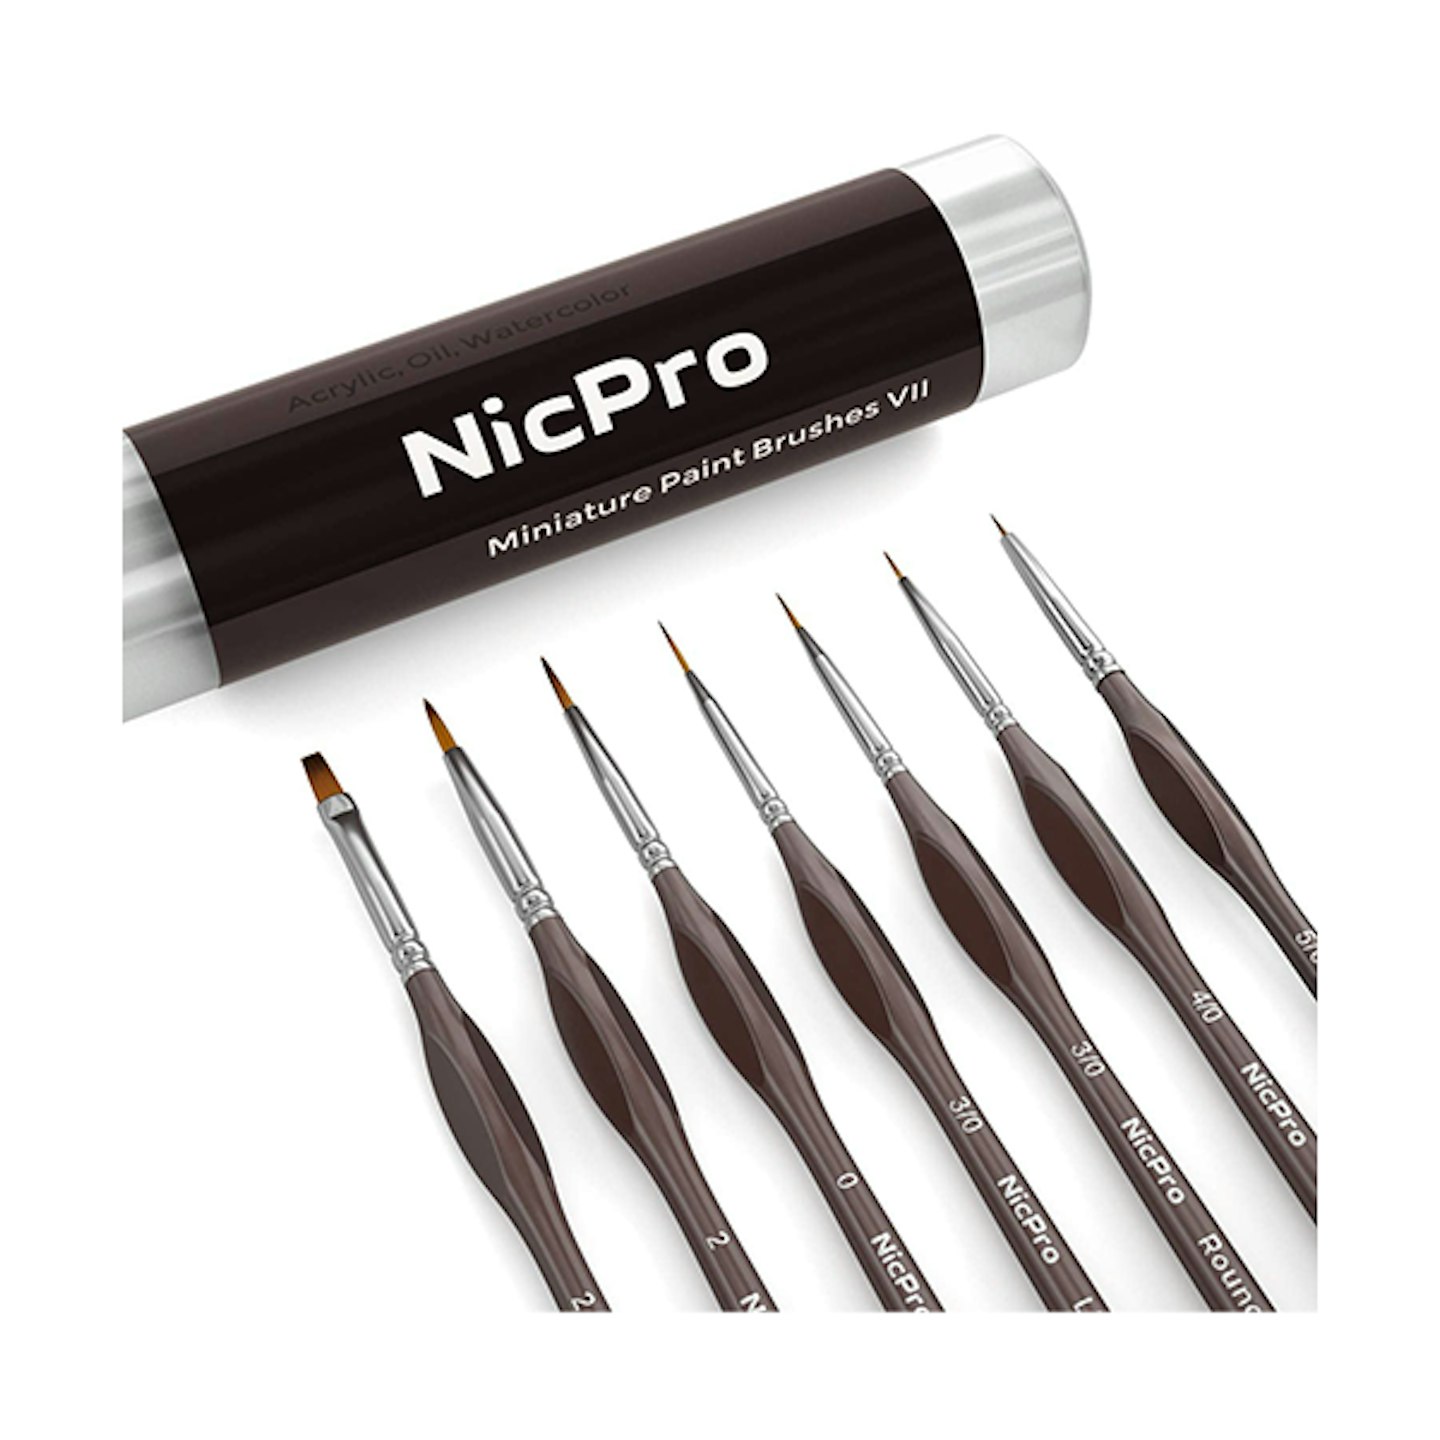 Nicpro Fine Detail Paint Brush Set, 7 PCS Small Professional Miniature Thin Brushes